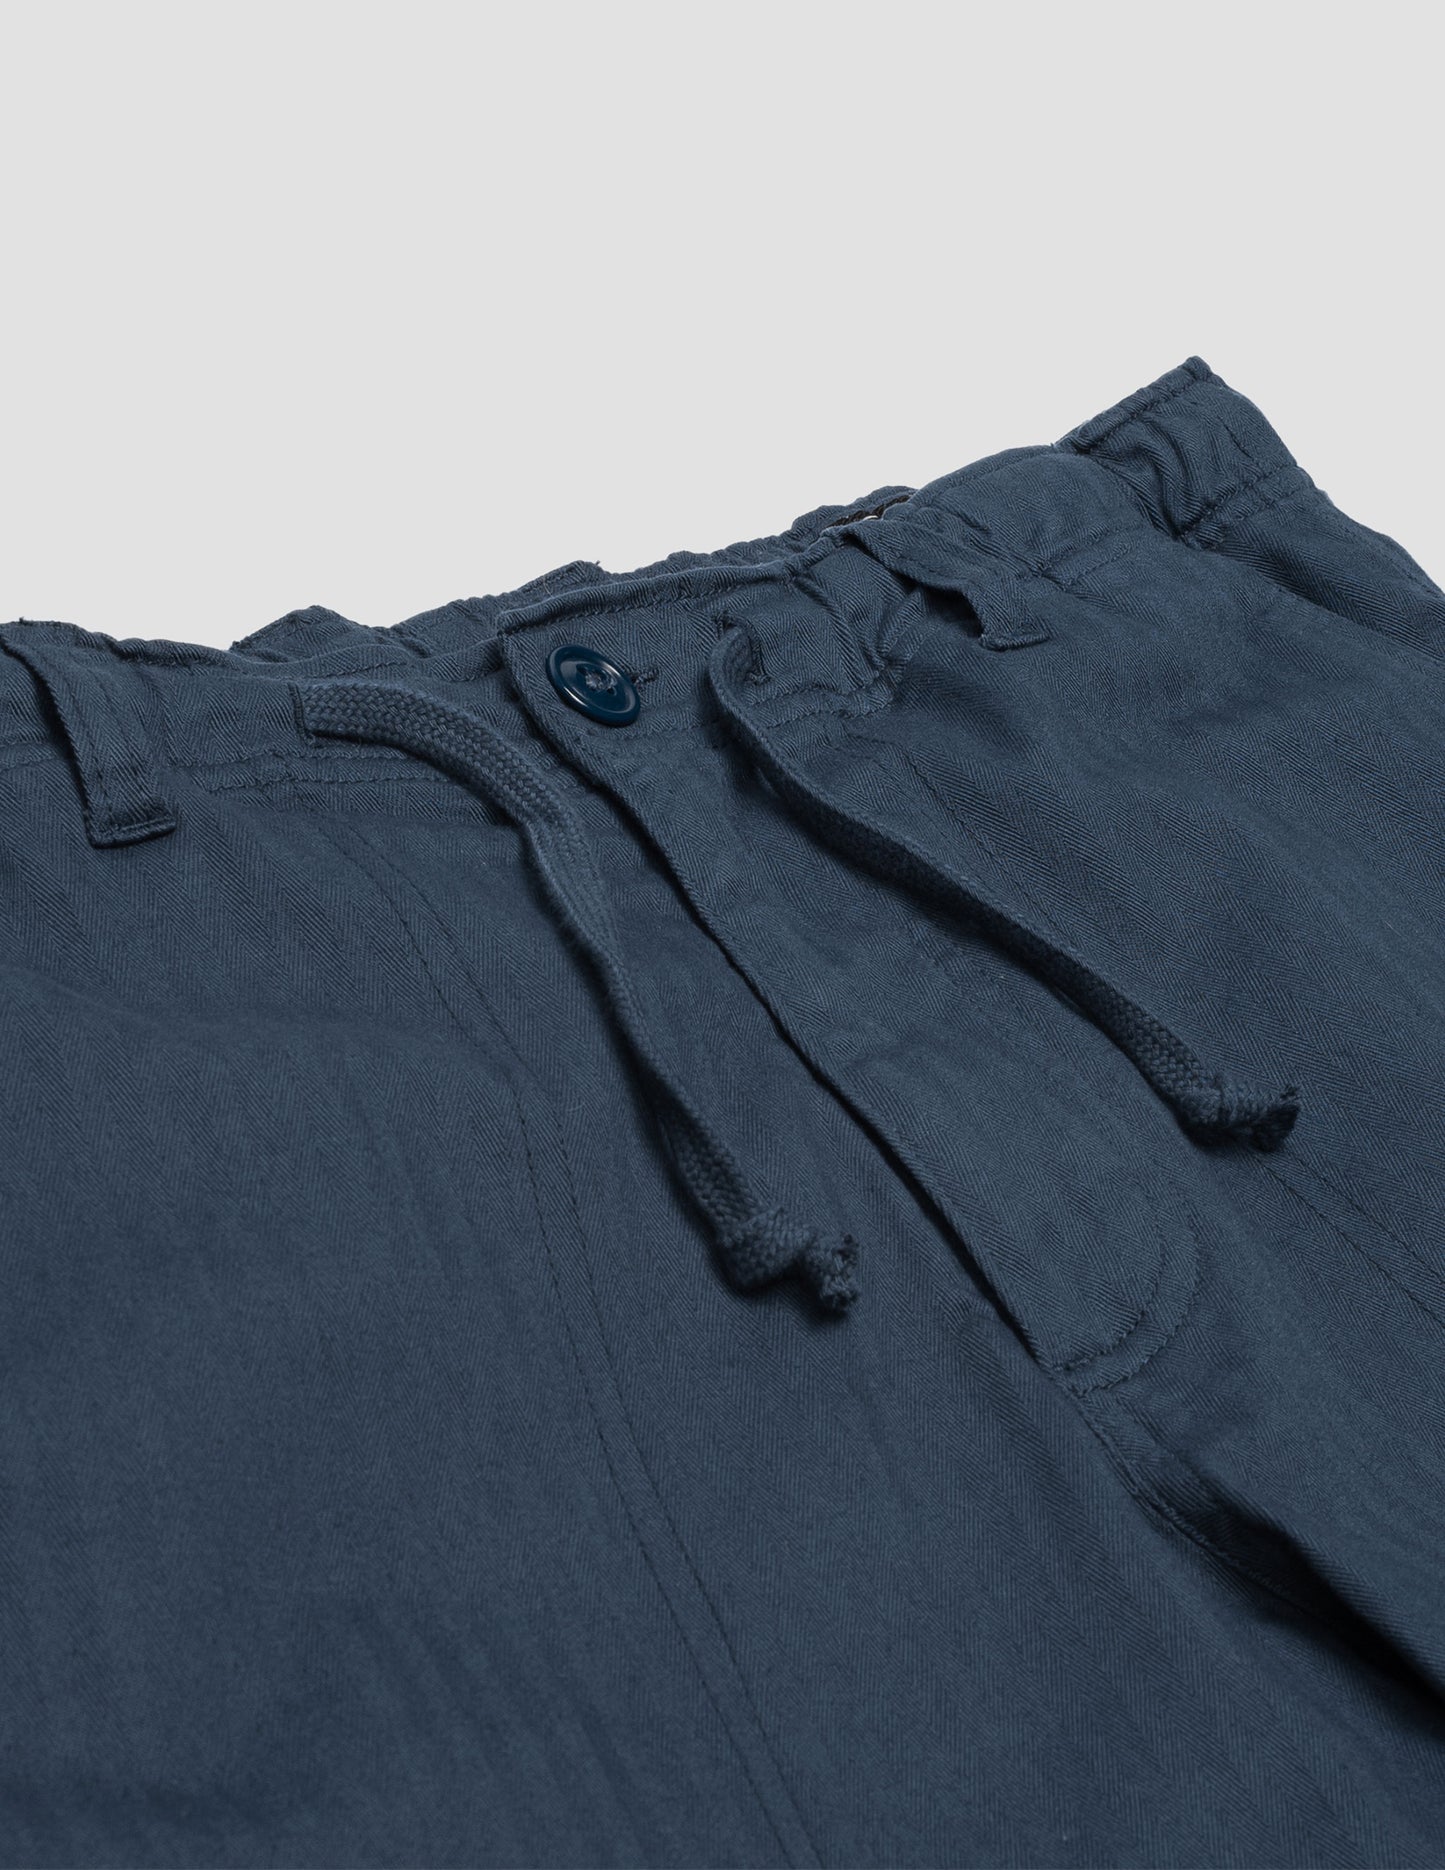 Rivay Skiff Mens Garment Dyed Short in Tarpon Blue 